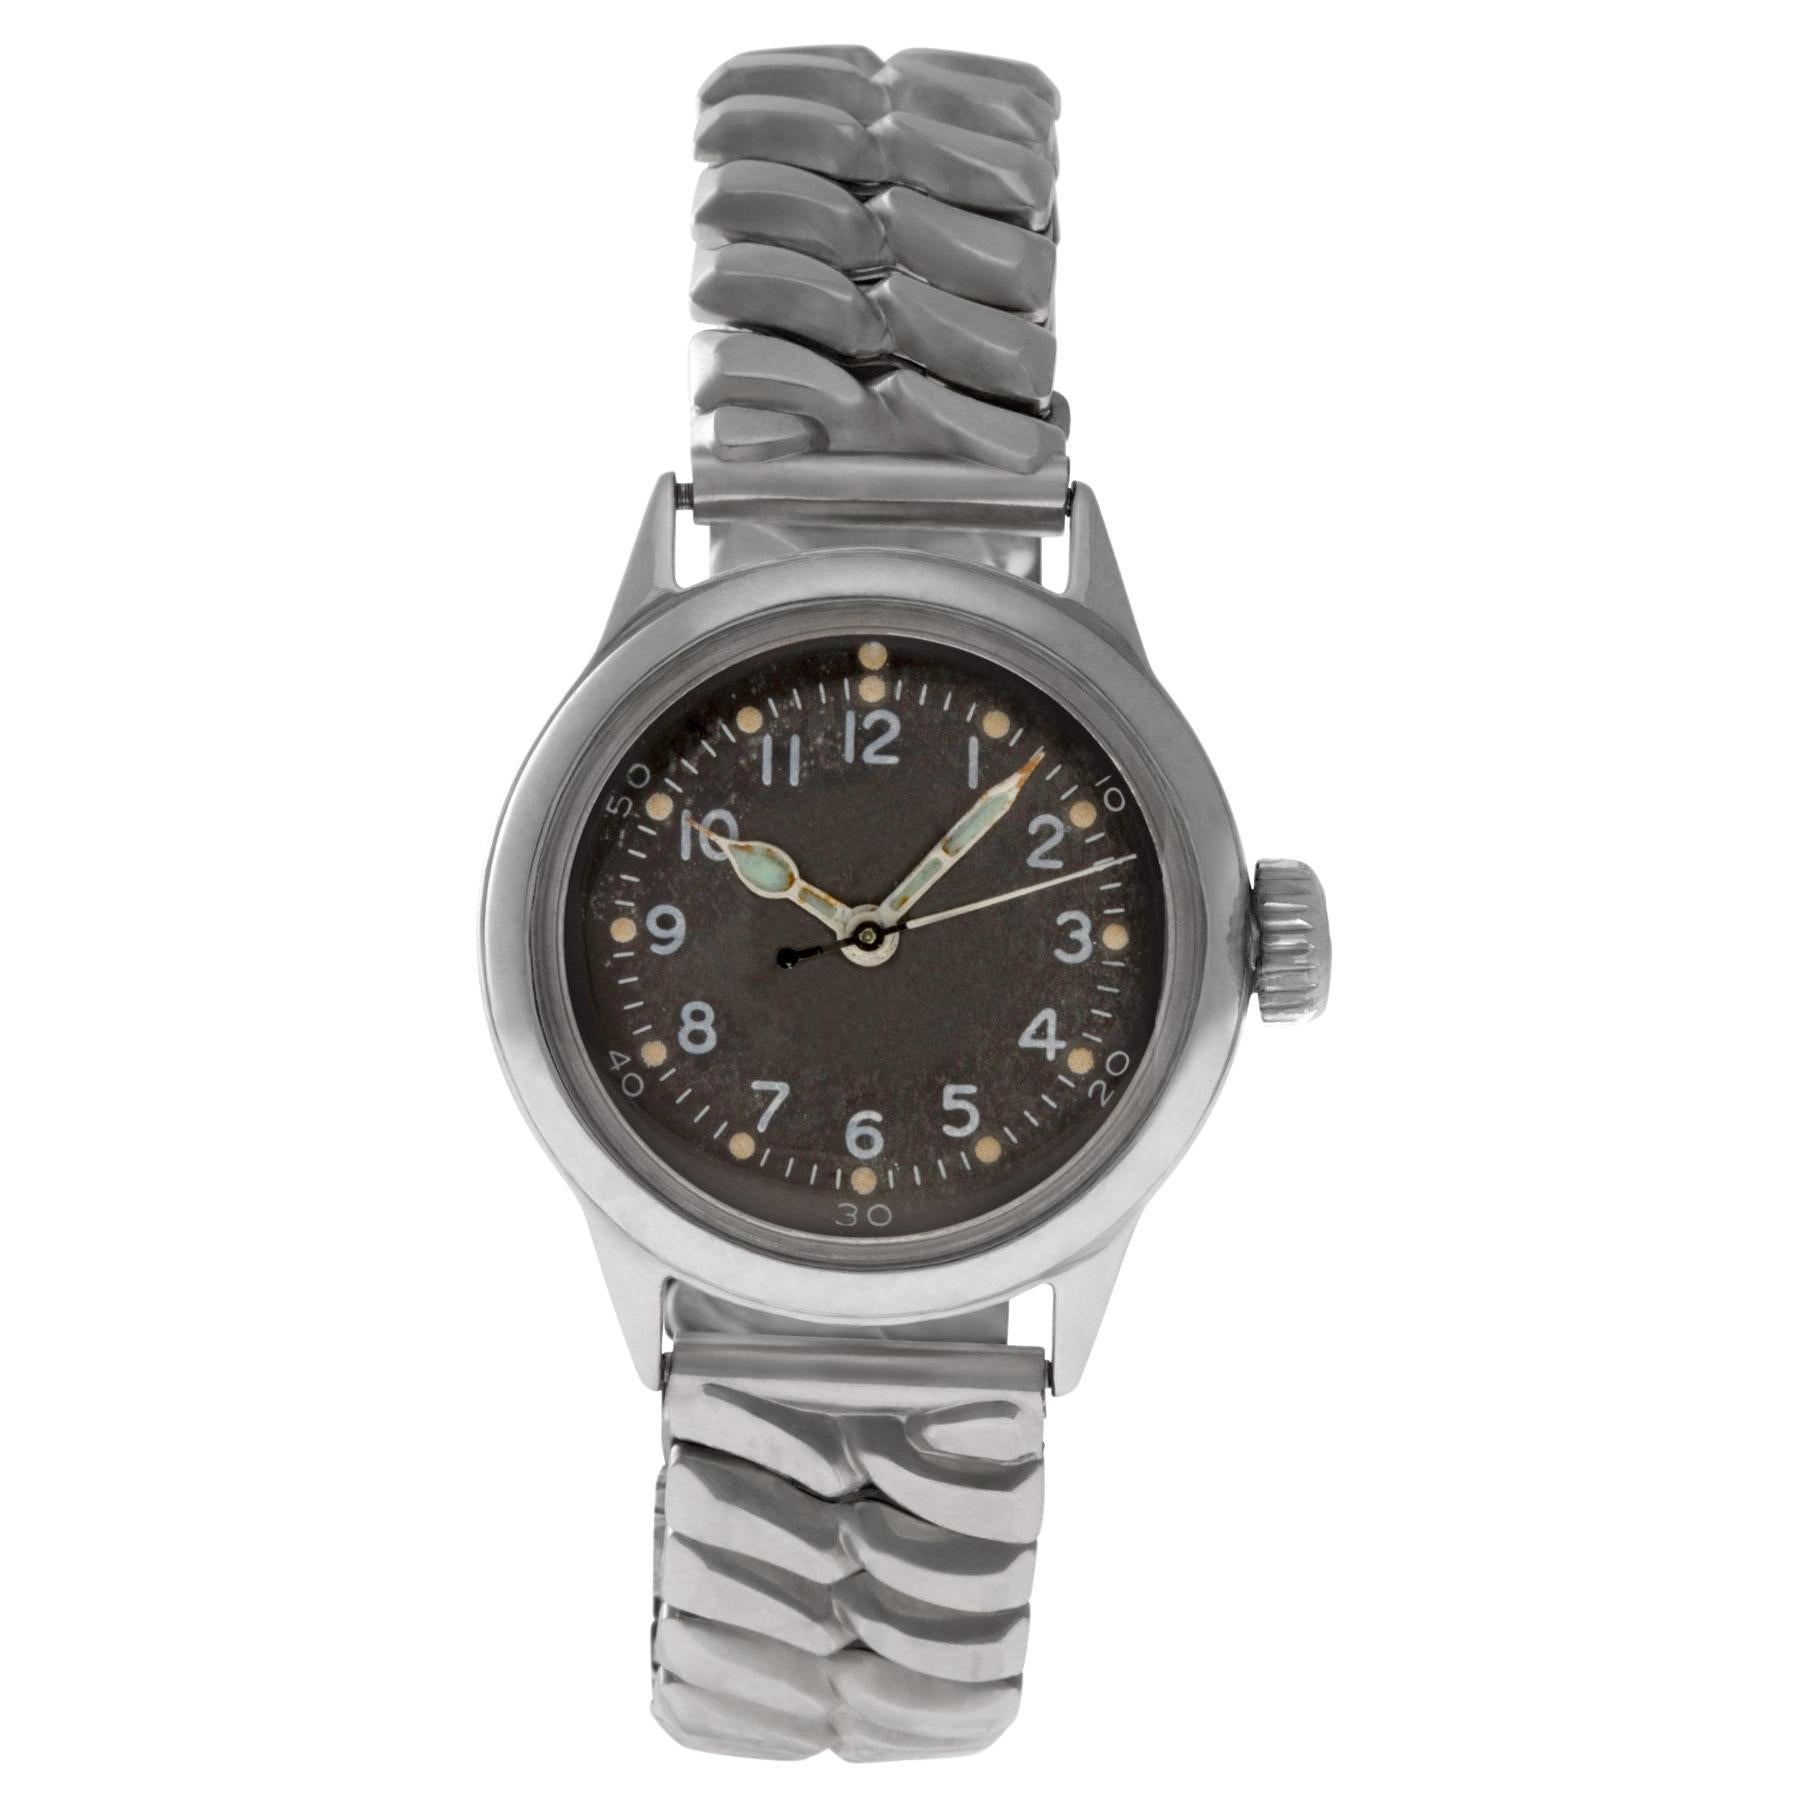 Hamilton Classic Watch, Stainless Steel, Quartz Case Ref 39103 For Sale